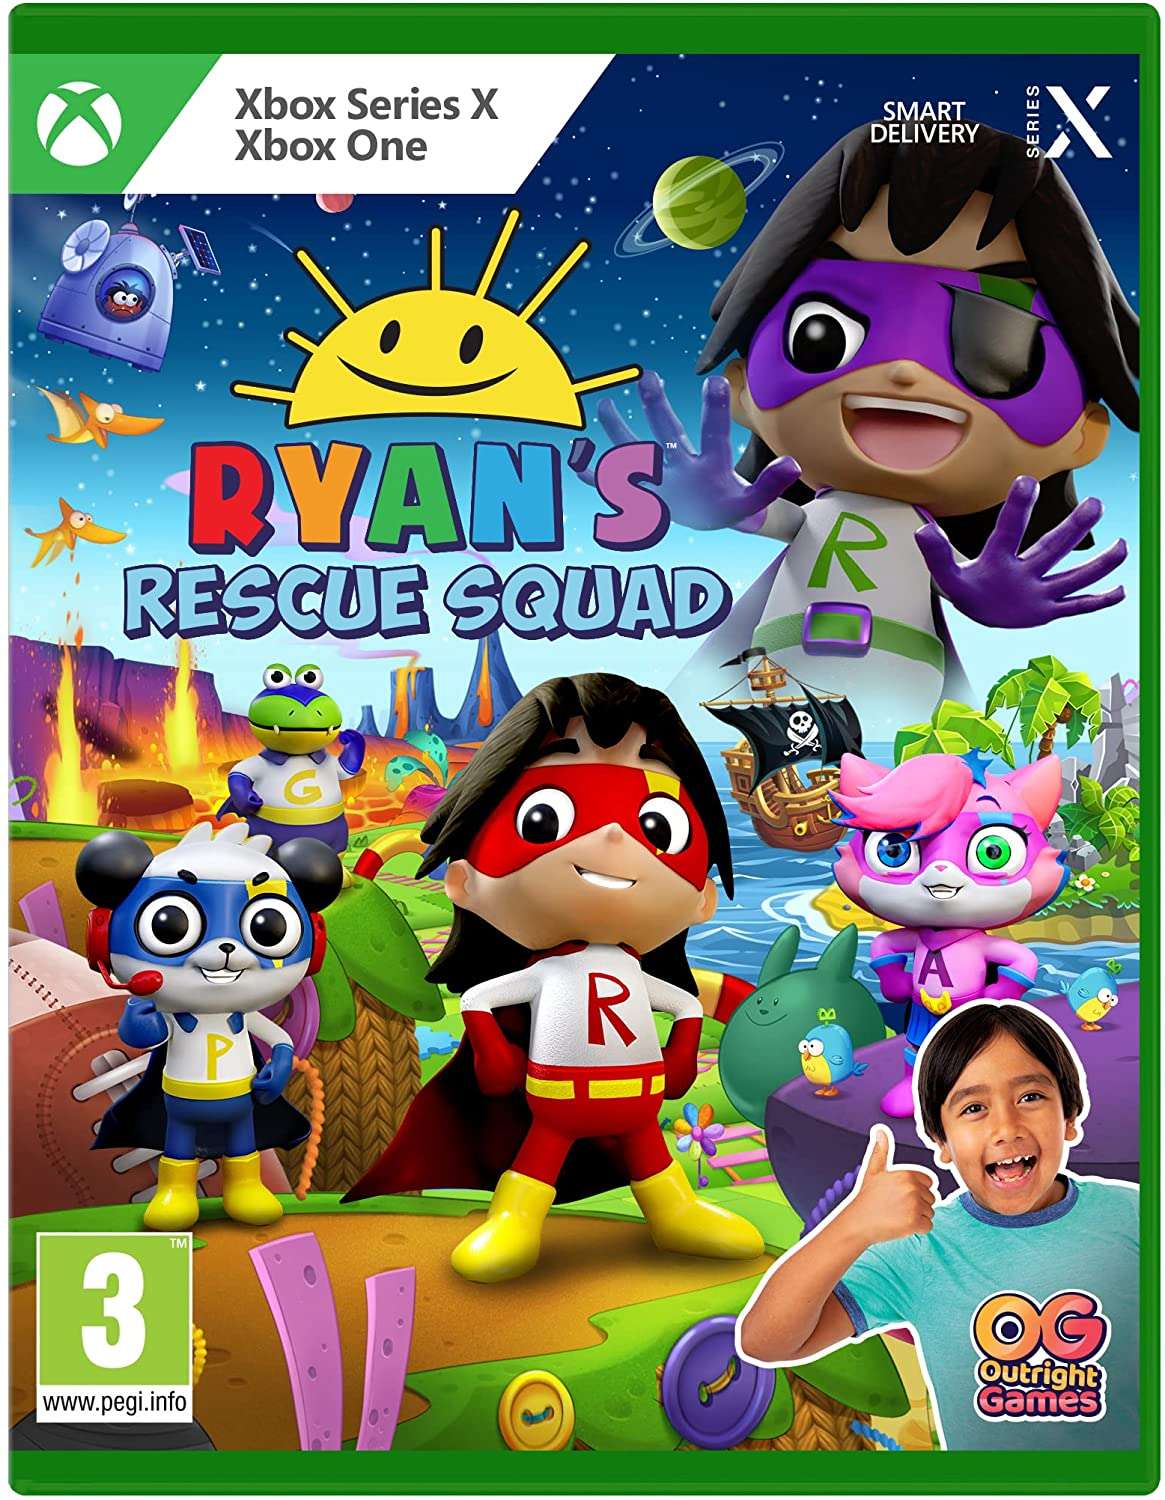 Ryans Rescue Squad for XBOXSERIESX to buy